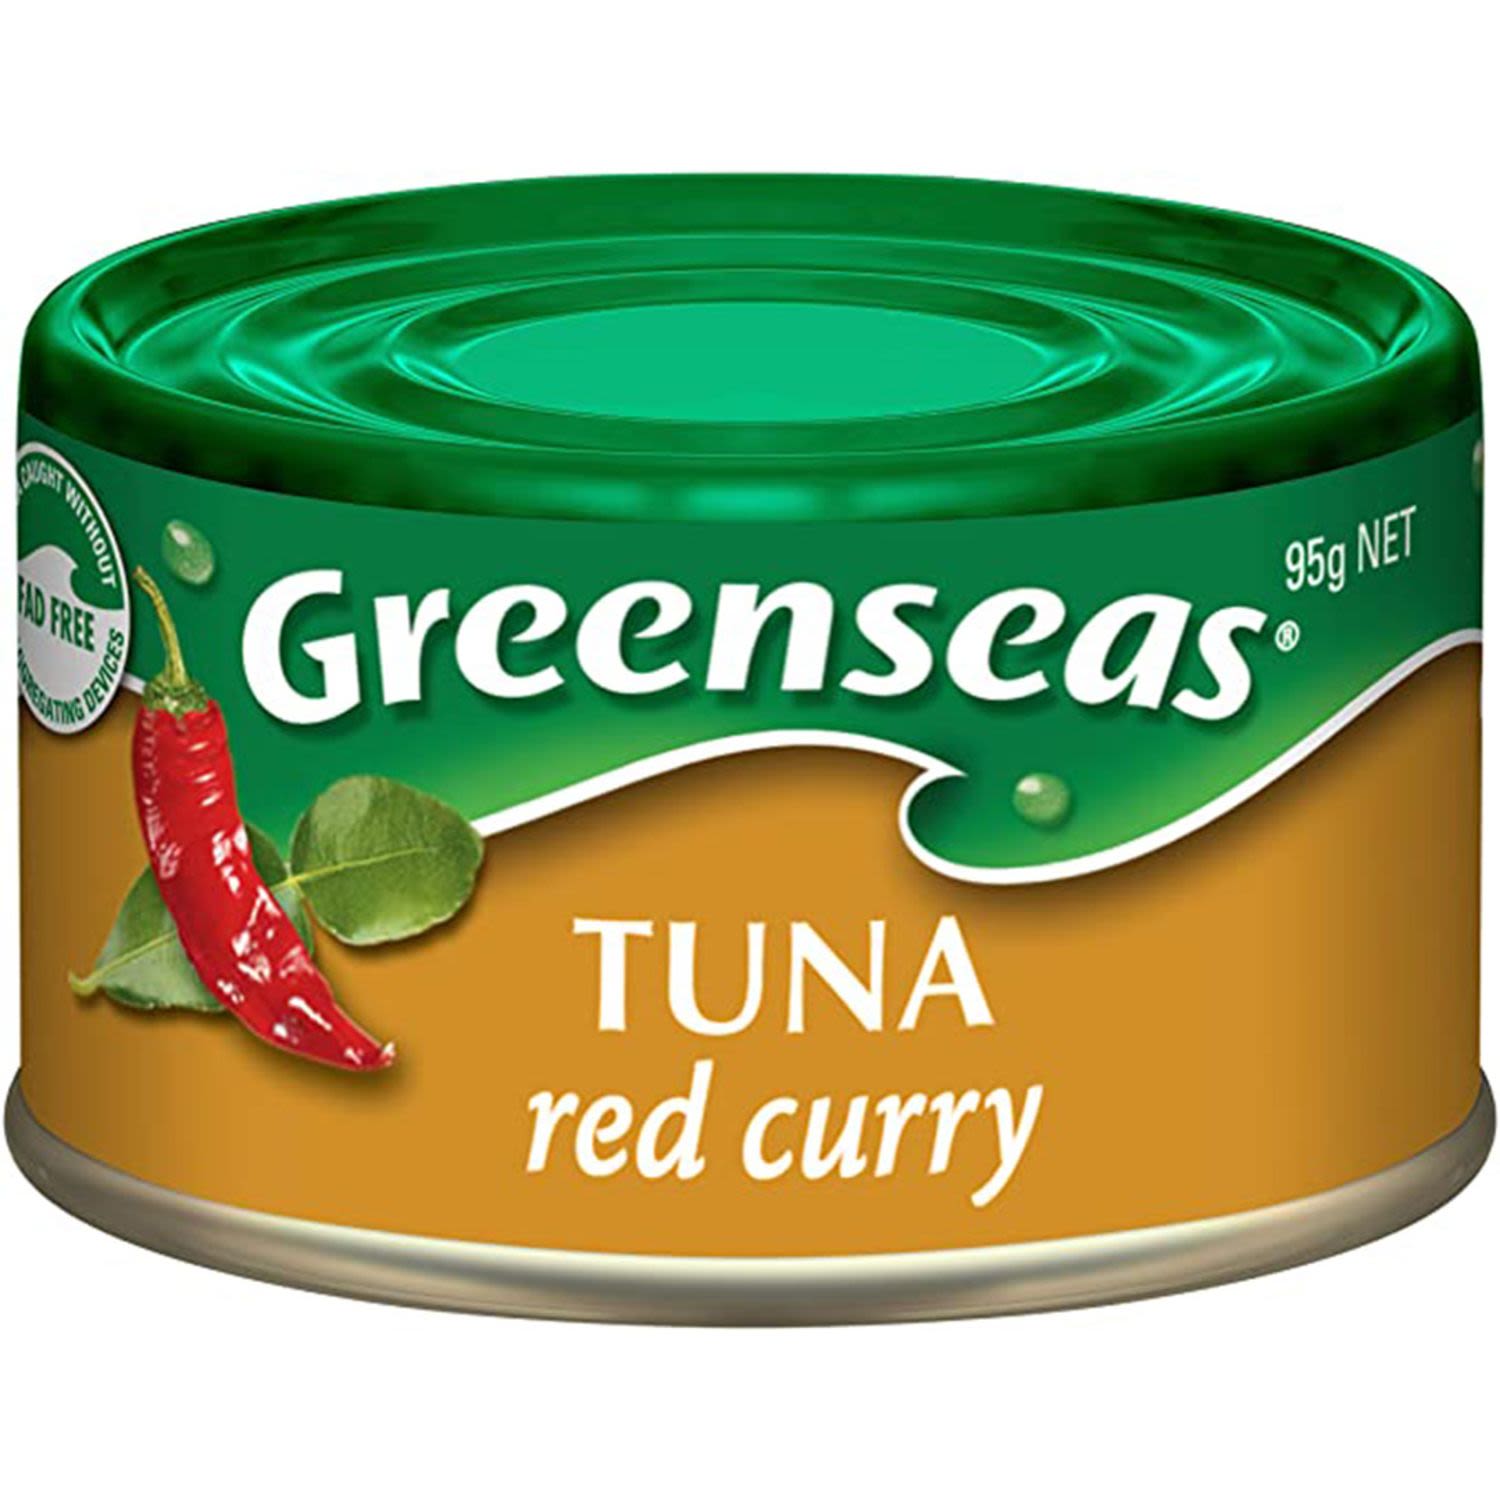 Greenseas Tuna Red Curry, 95 Gram